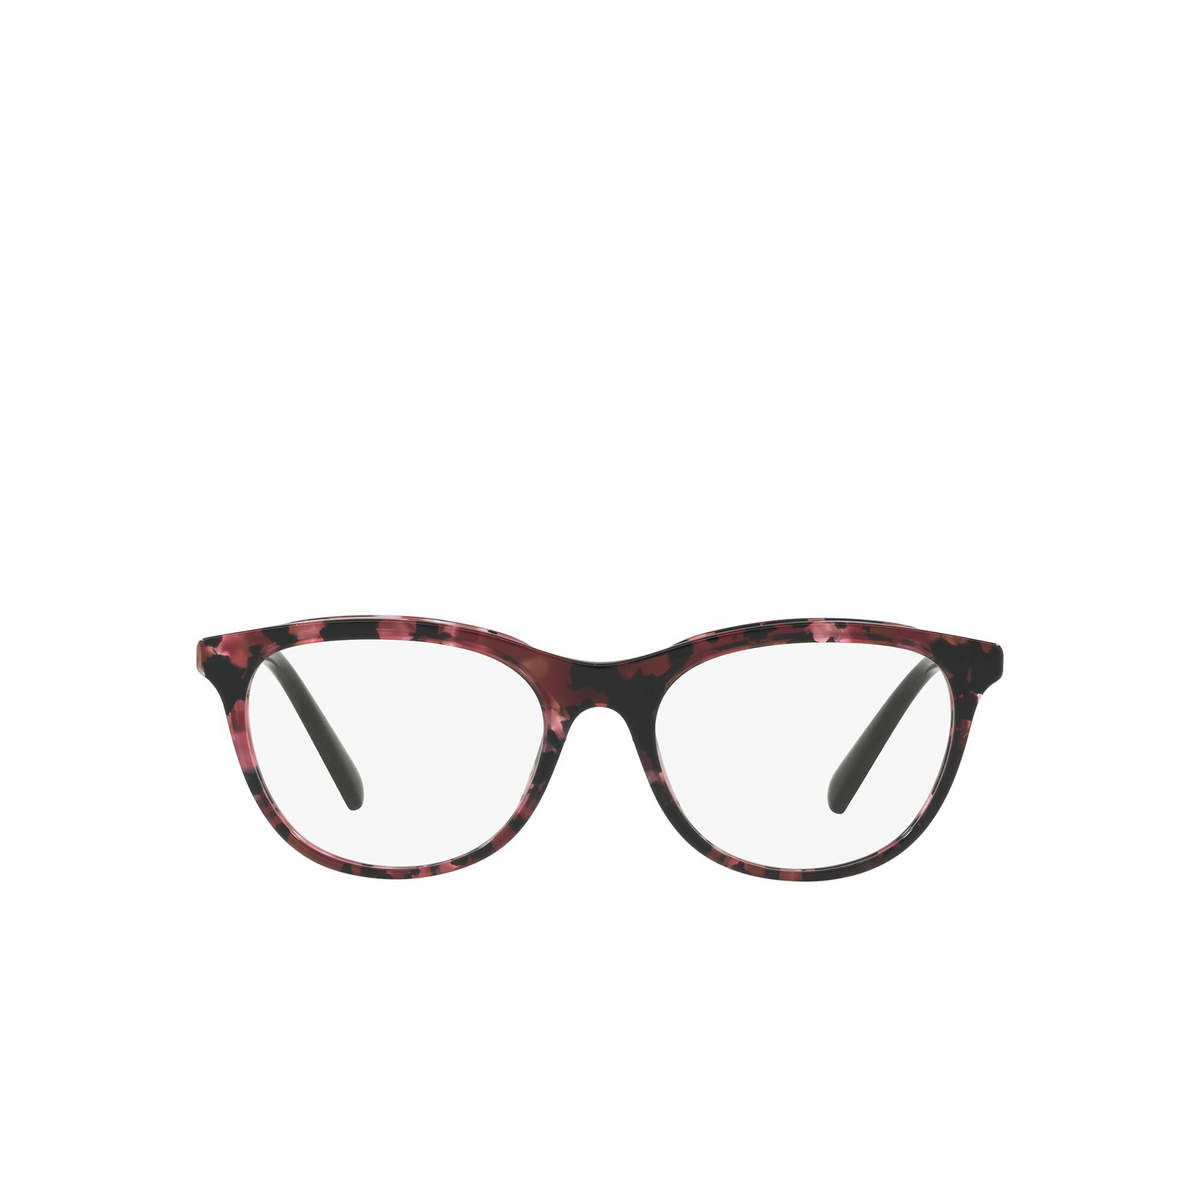 Valentino® Oval Eyeglasses: VA1006 color Silver / Havana Pink 3006 - front view.